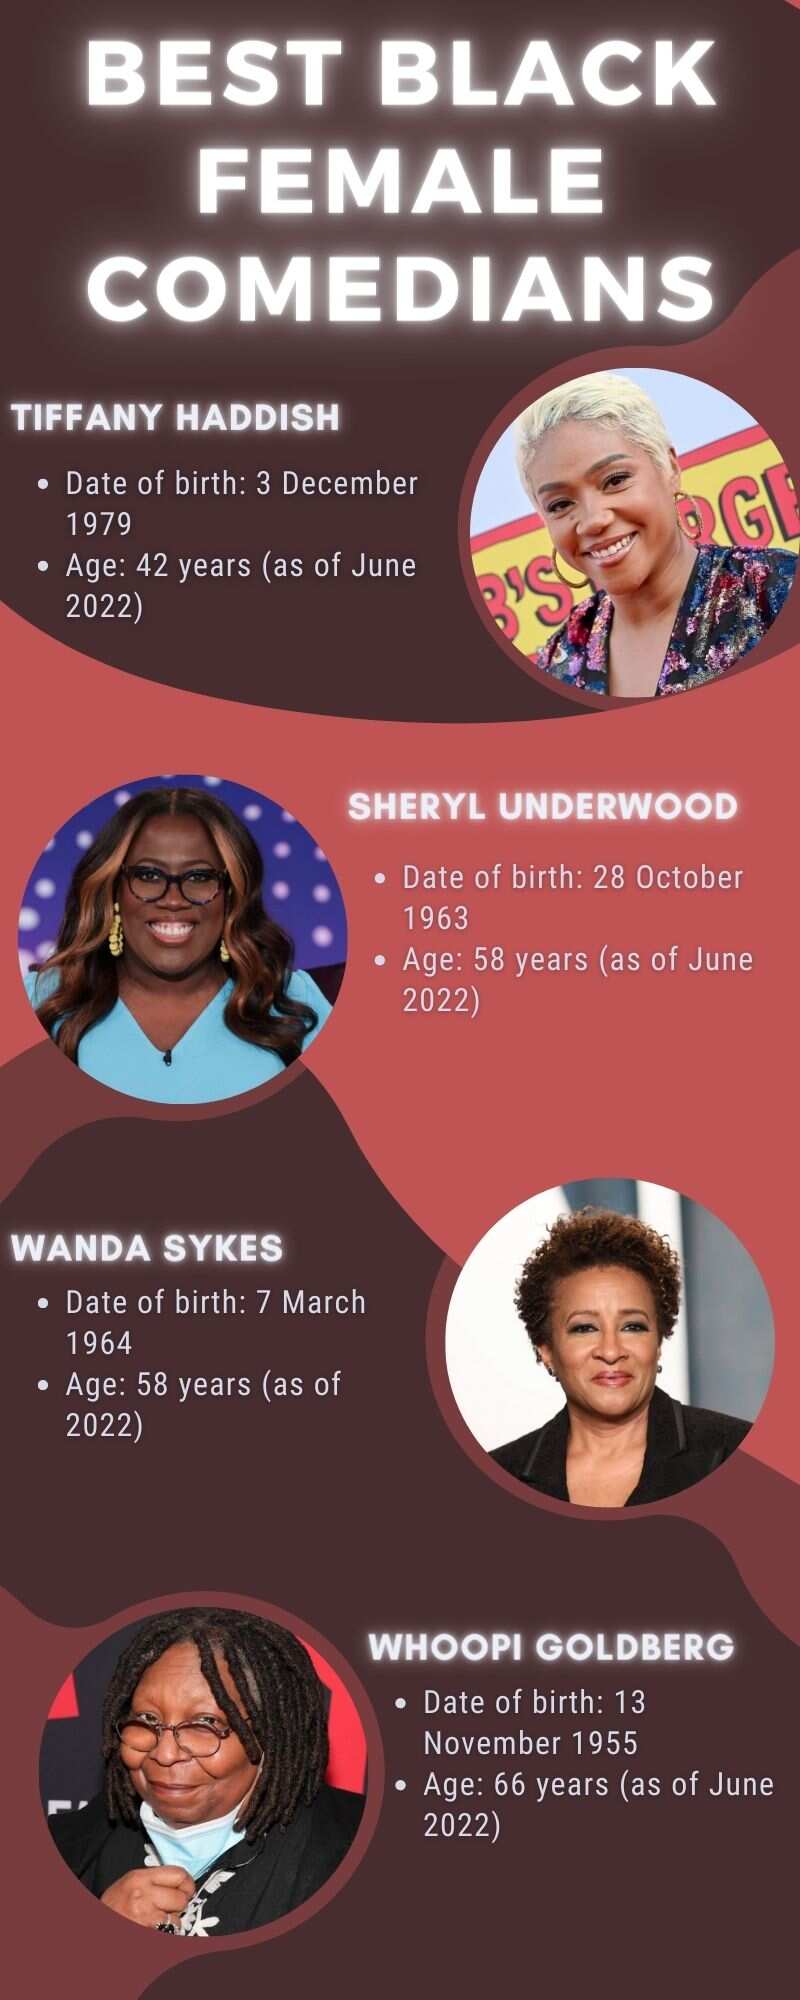 Best black female comedians